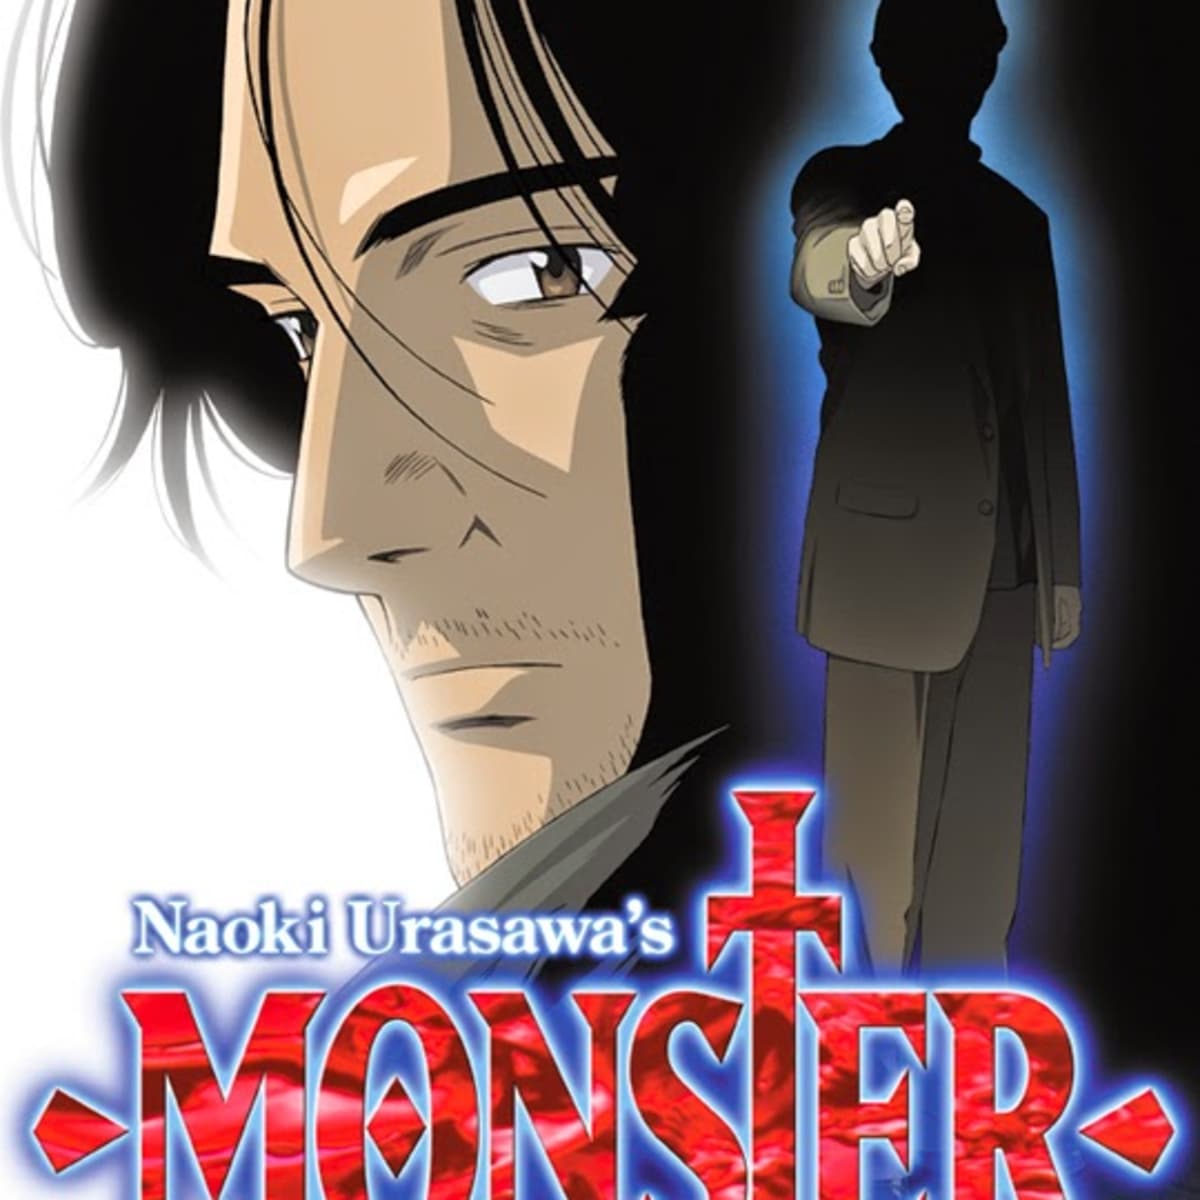 Naoki Urasawa's Monster: A Spoiler Free Anime Review